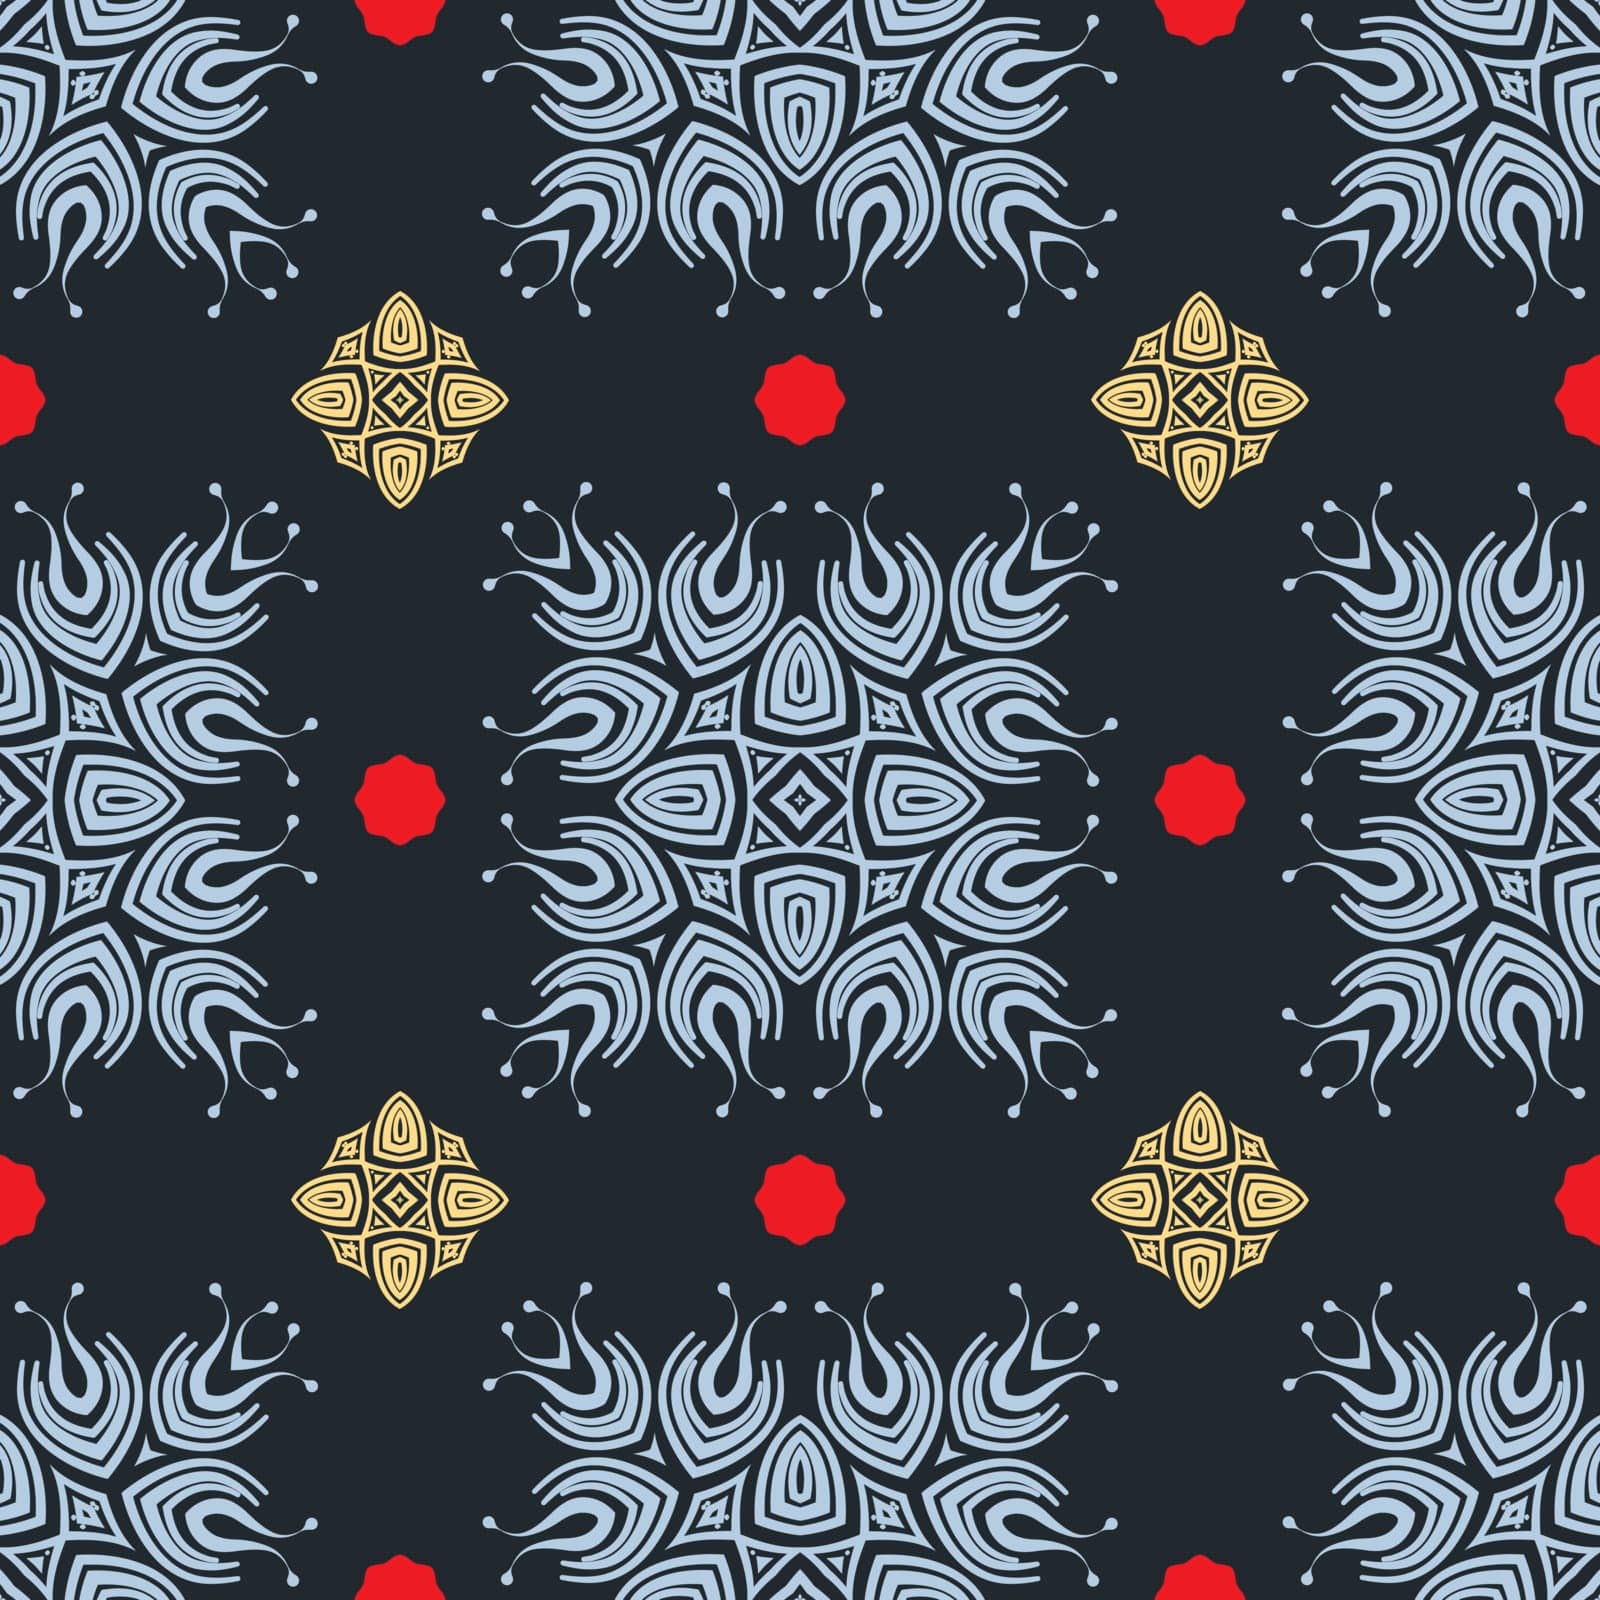 Ornament pattern vector tile for multipurpose use in design